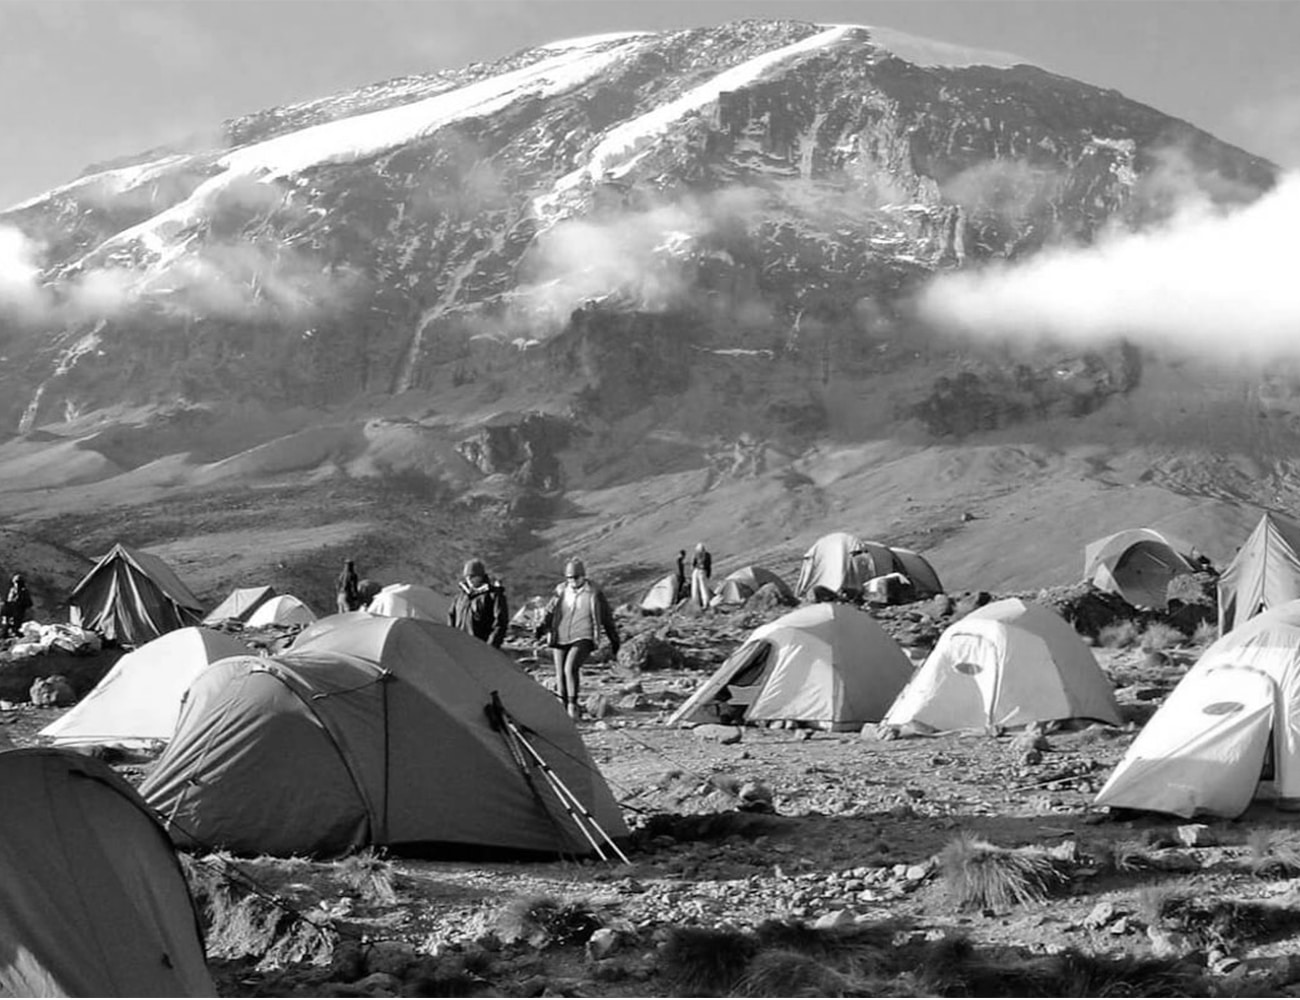 People Camping at Lemosho Route, Kilimanjaro